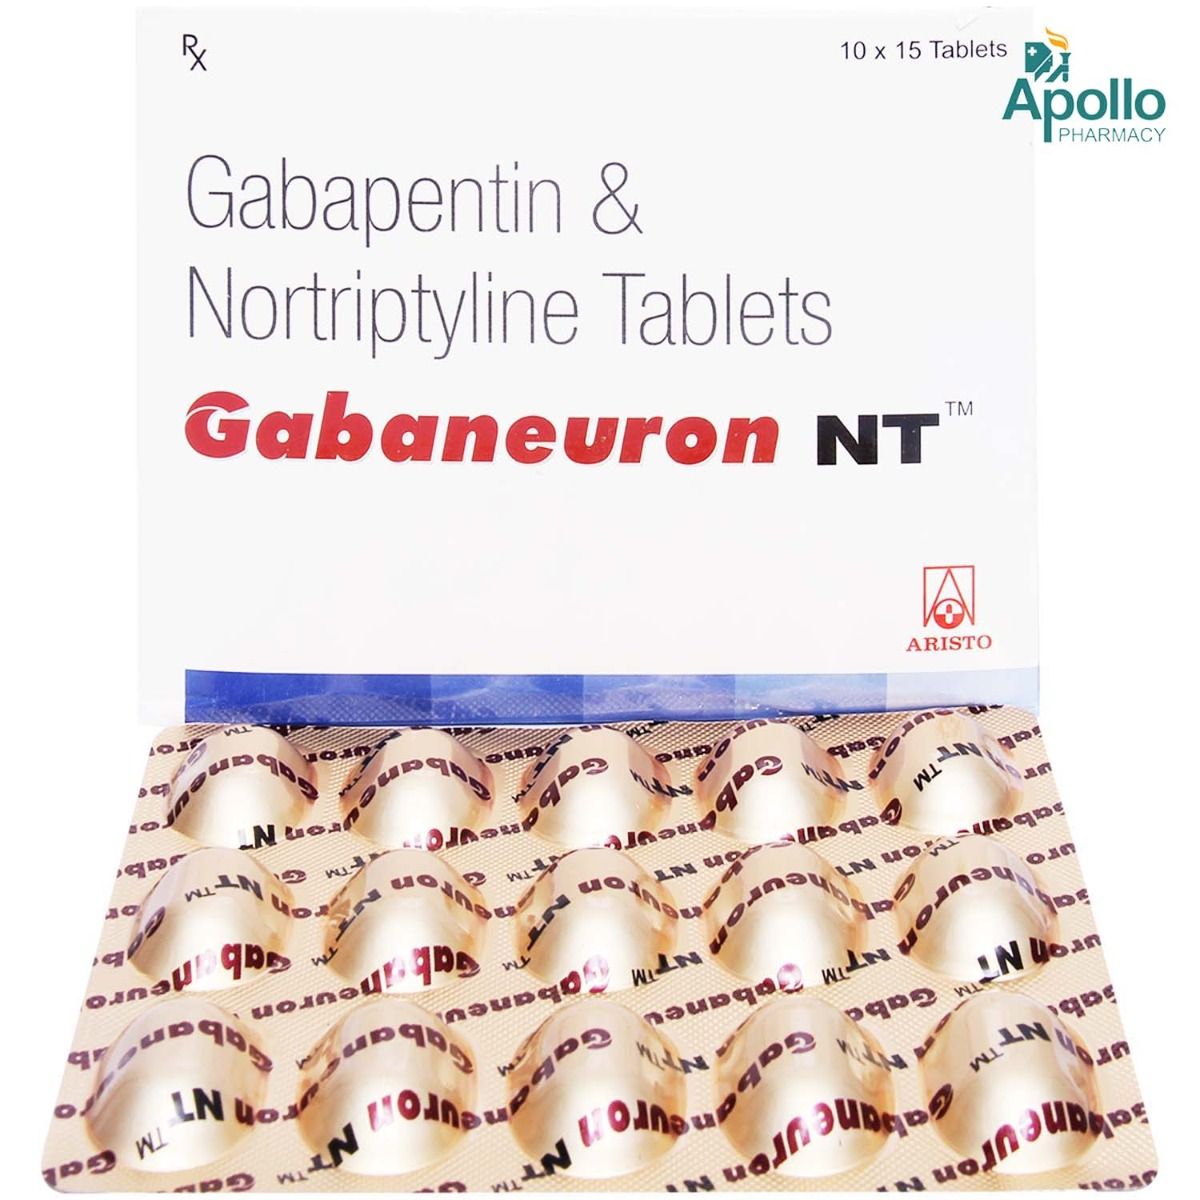 Gabaneuron NT Tablet 15's, Pack of 15 TABLETS